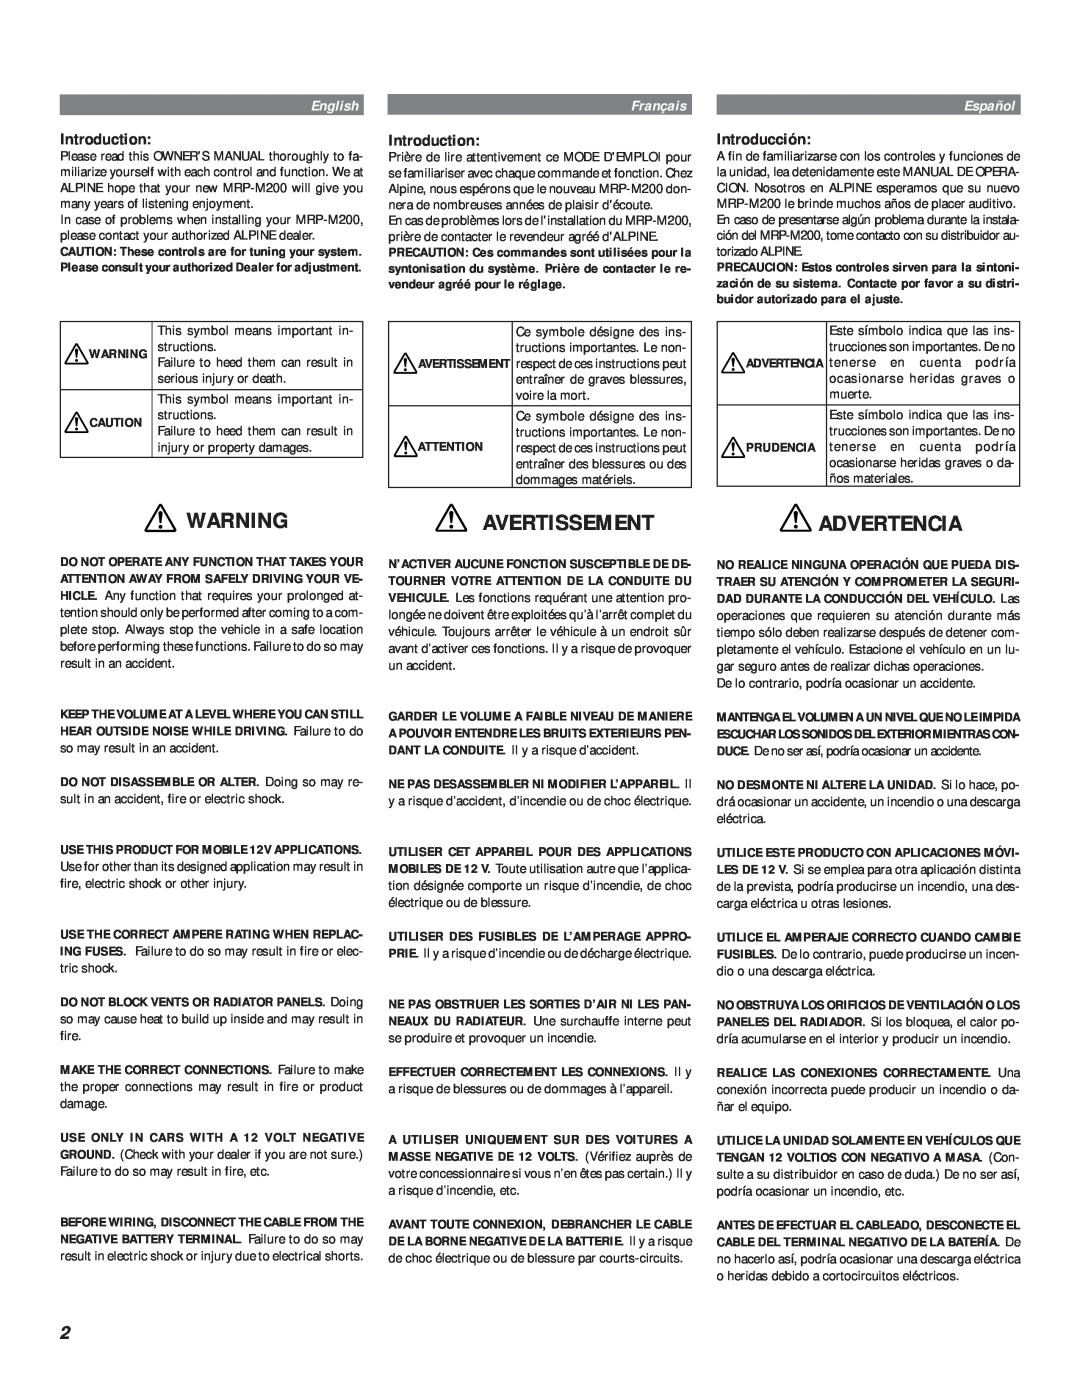 Alpine MRP-M200 owner manual Avertissement, Advertencia, Introduction, Introducción, English, Français, Español 